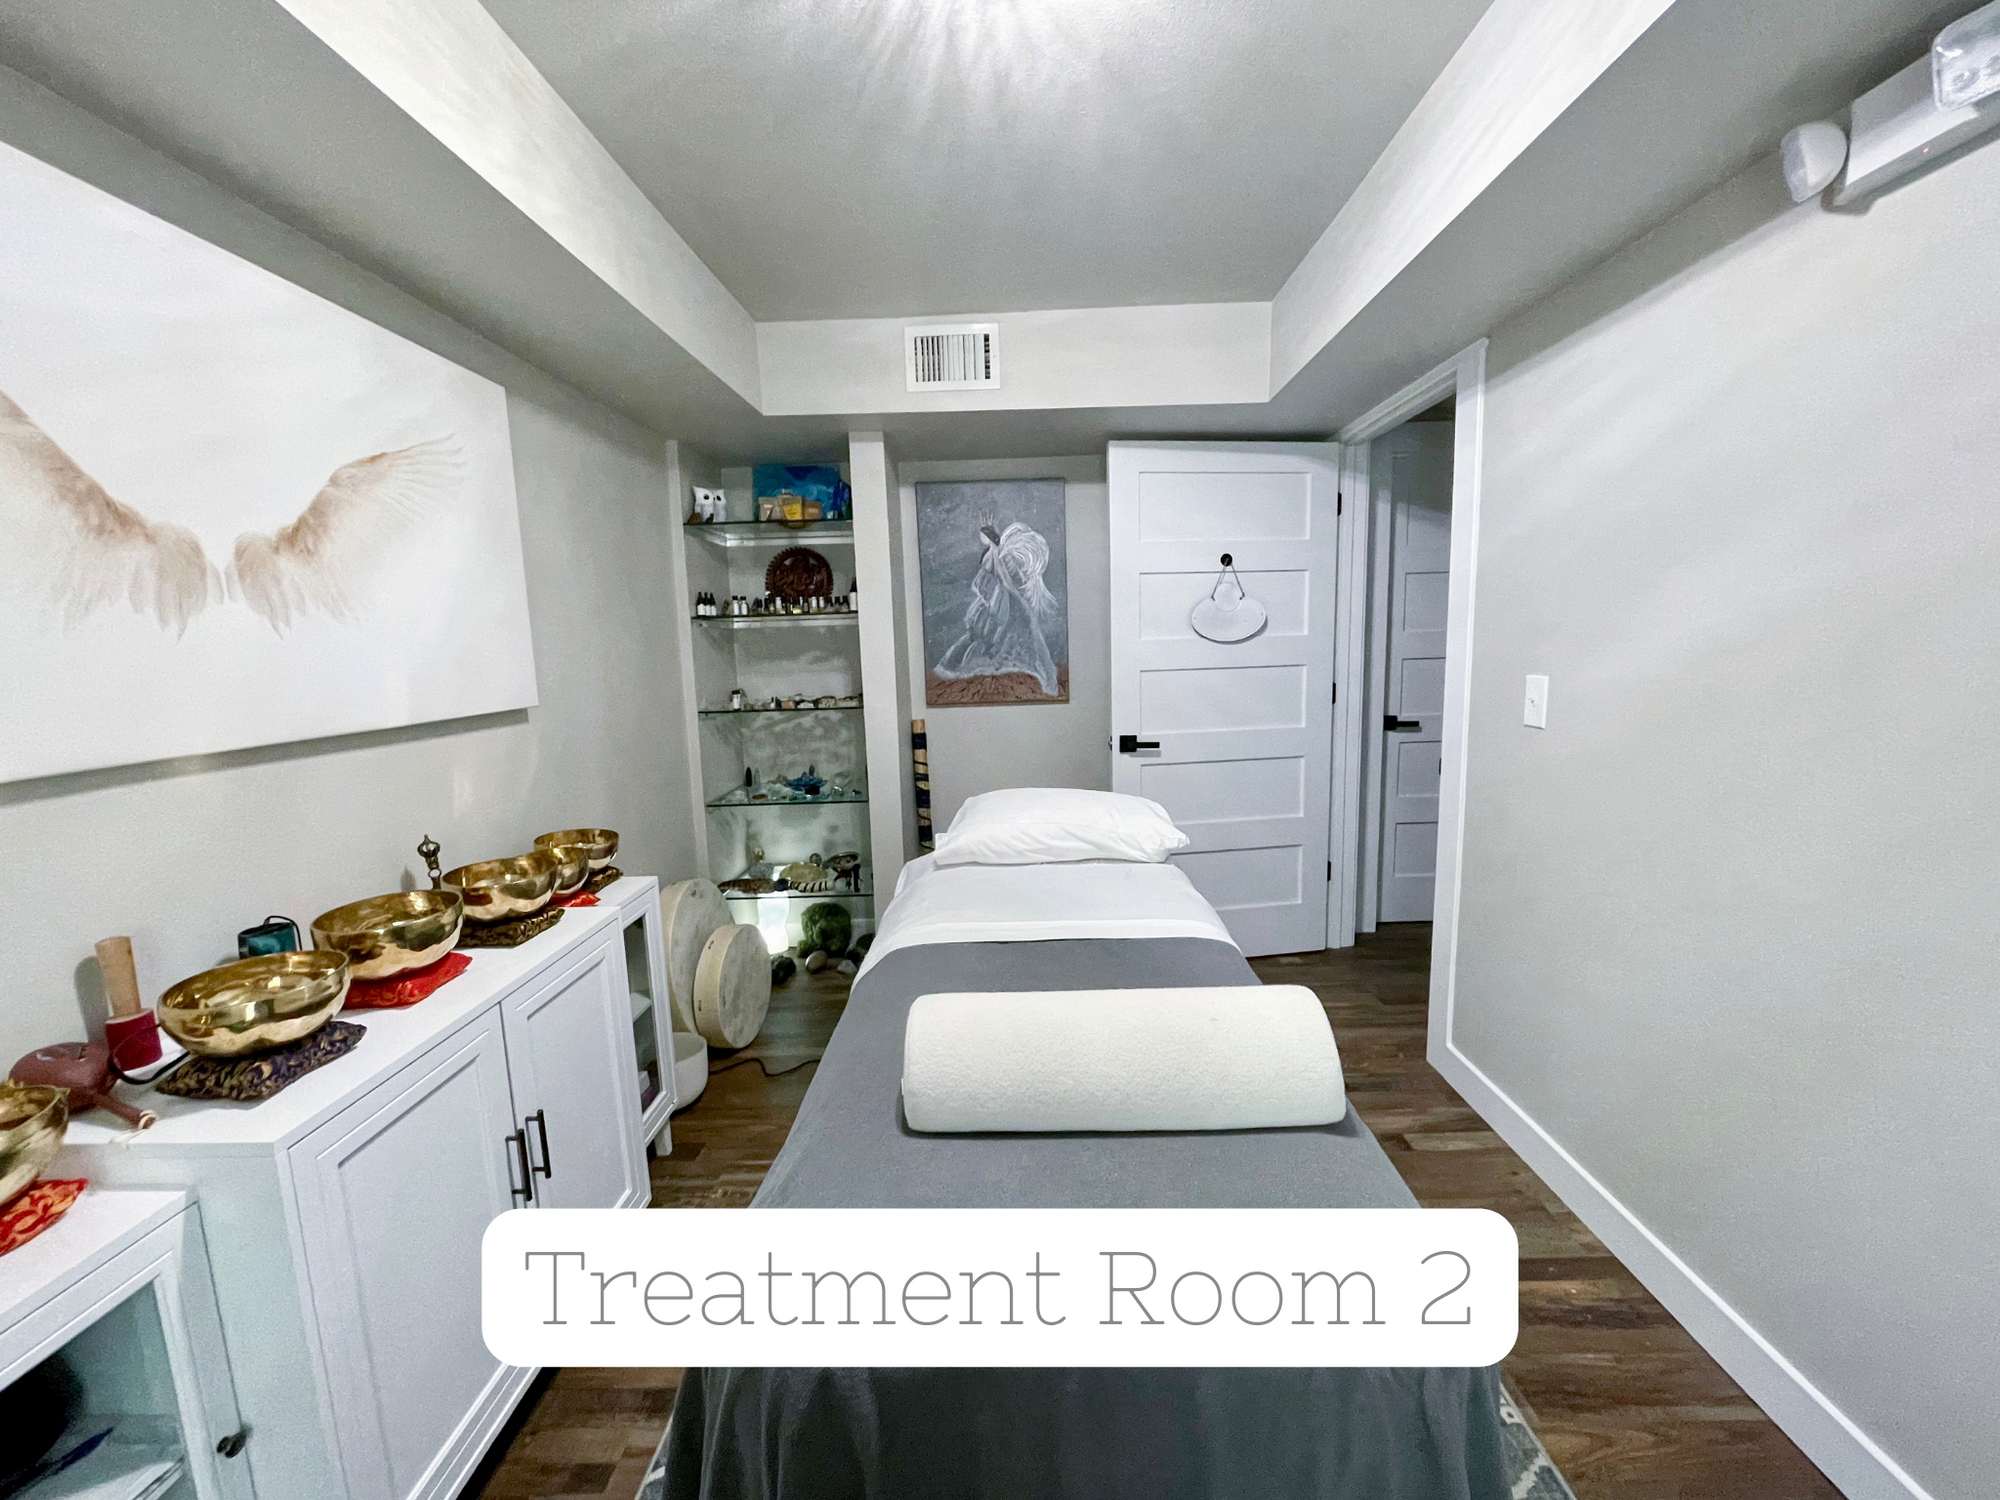 Weekday Treatment Room Rental - Room 2